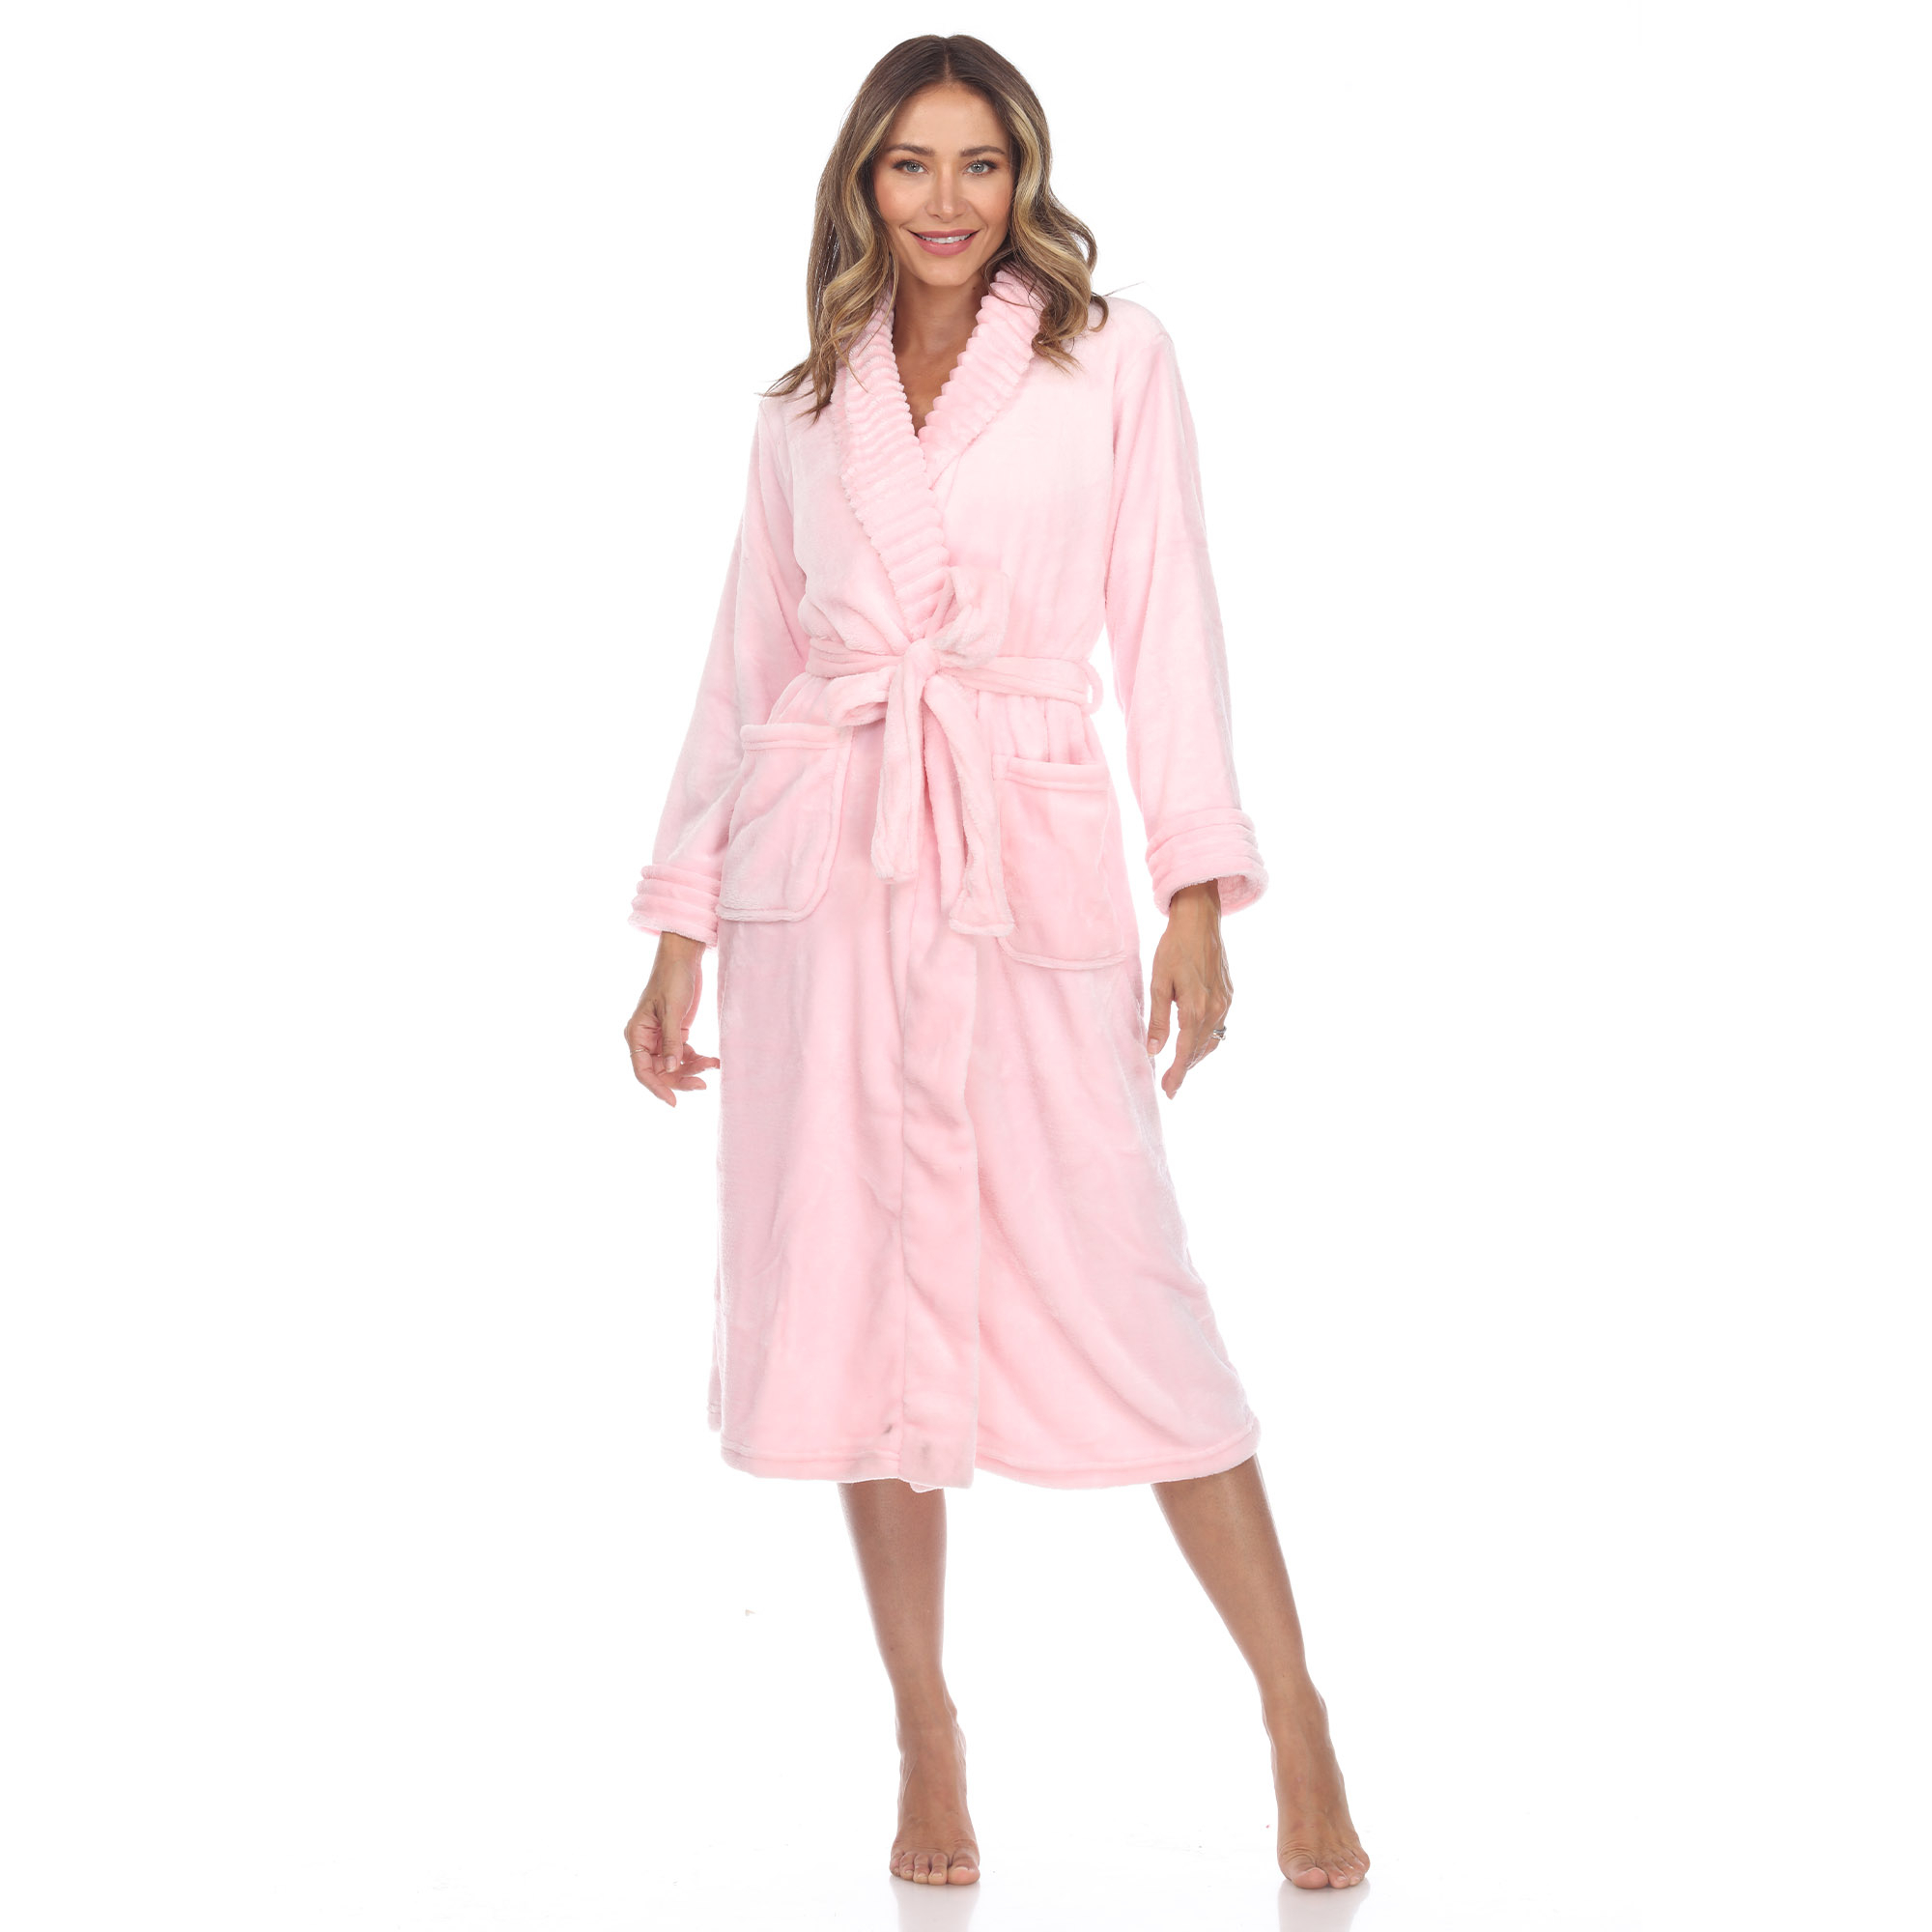 White Mark Women's Cozy Lounge Robe - Pink, 2X/3X